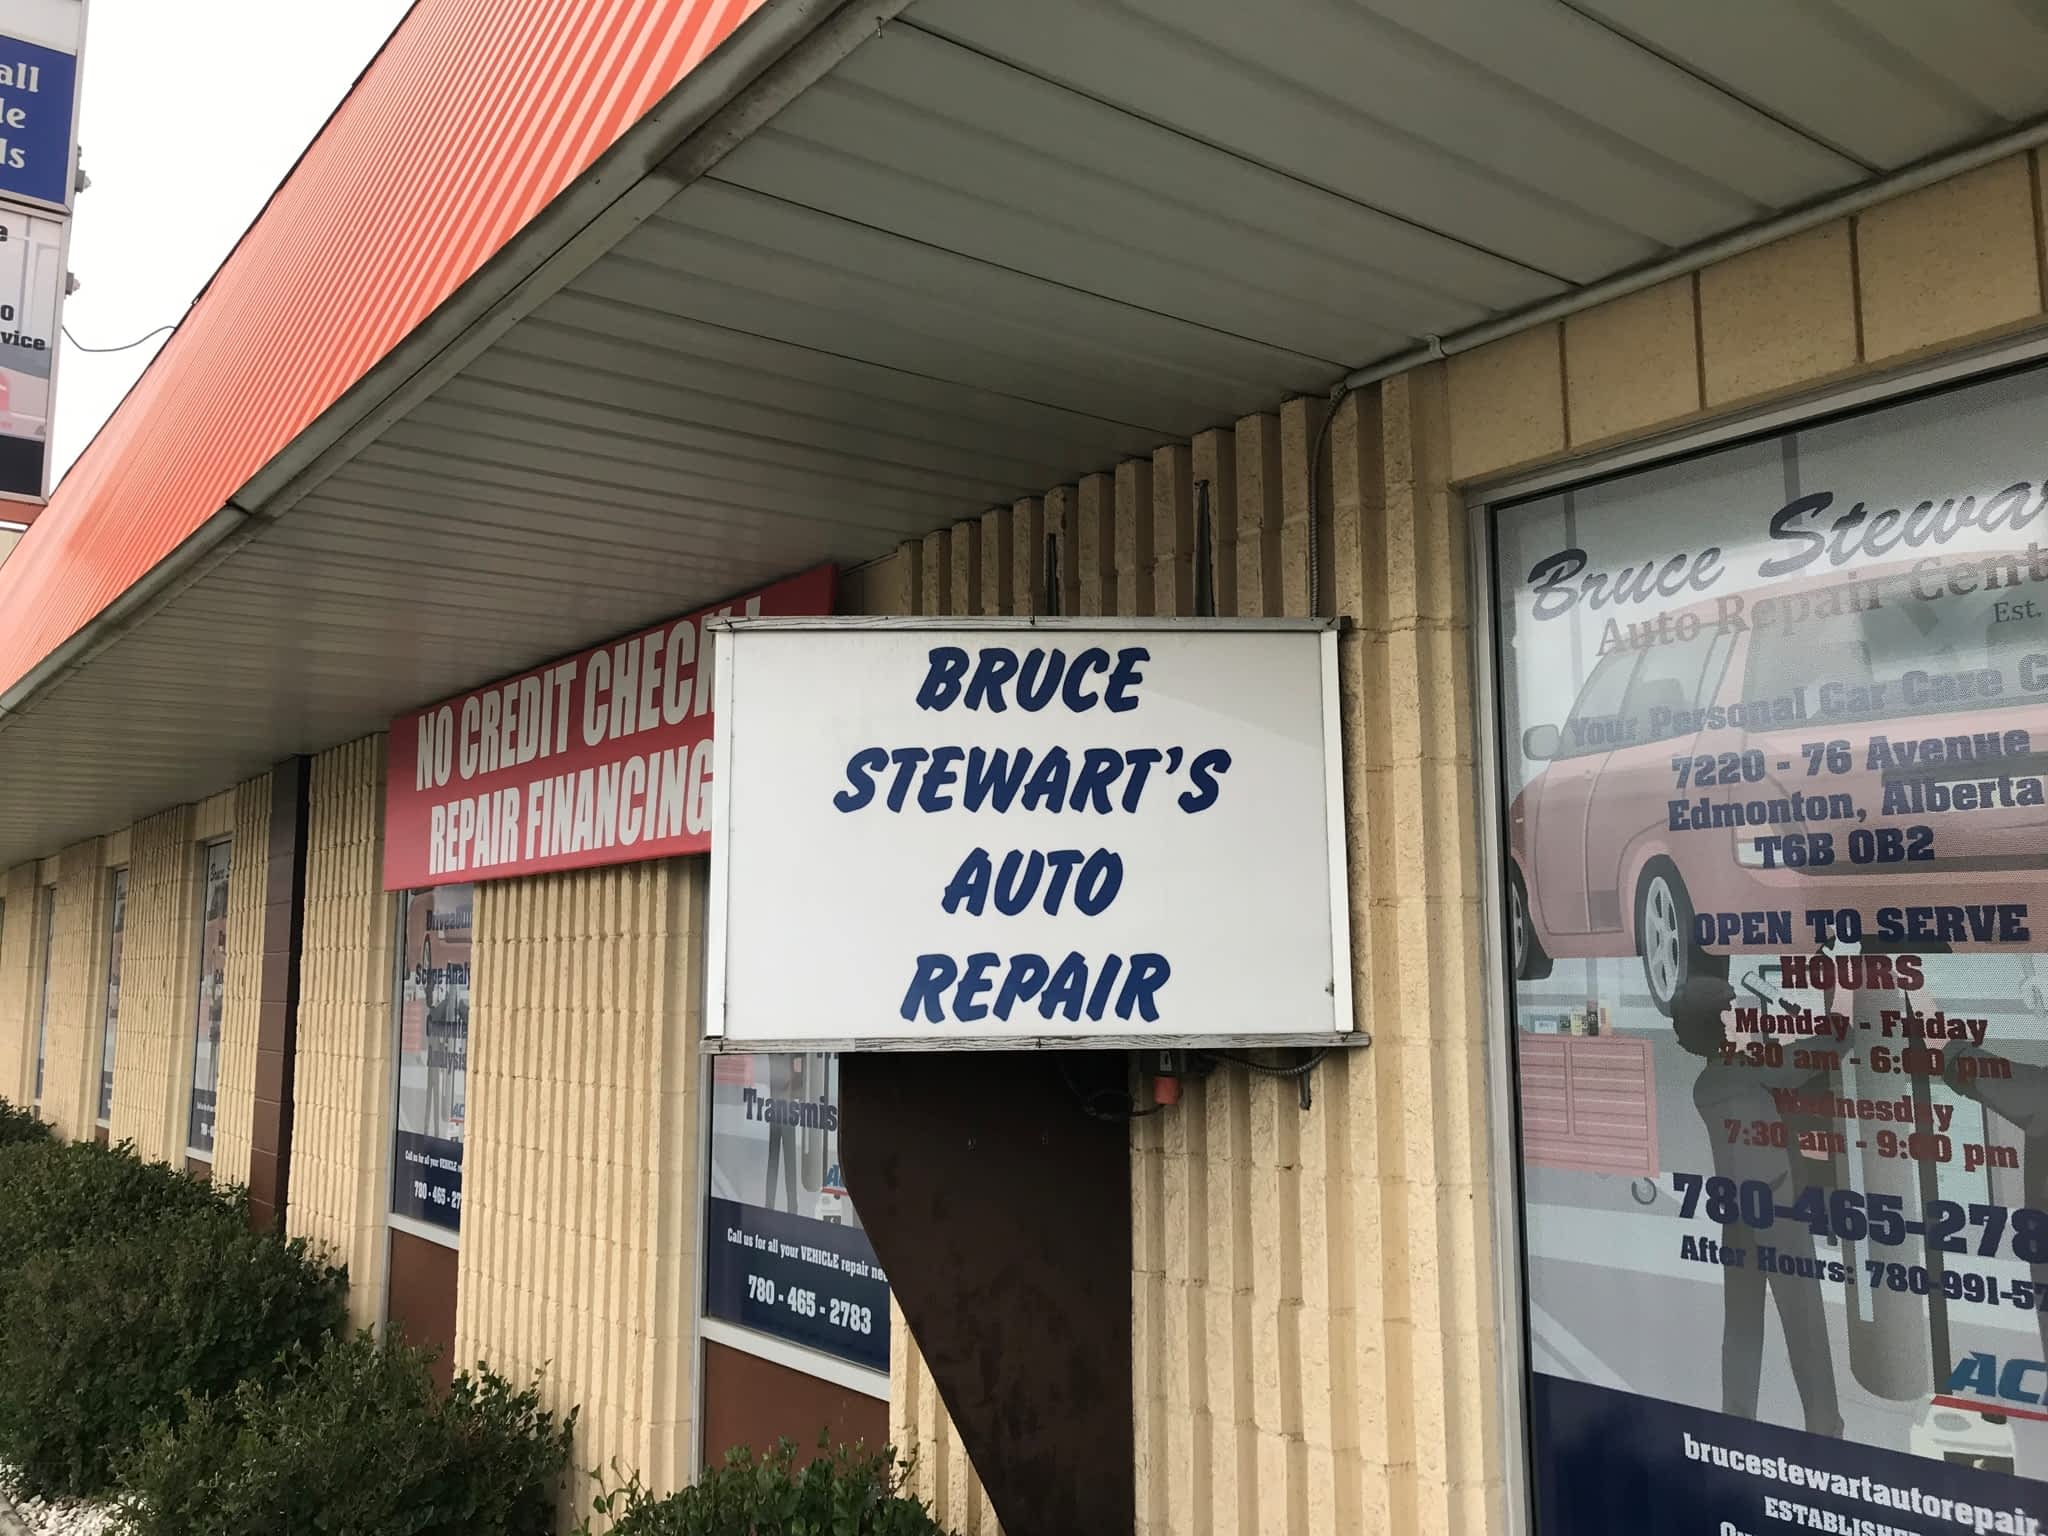 photo Bruce Stewart's Auto Repair Centre